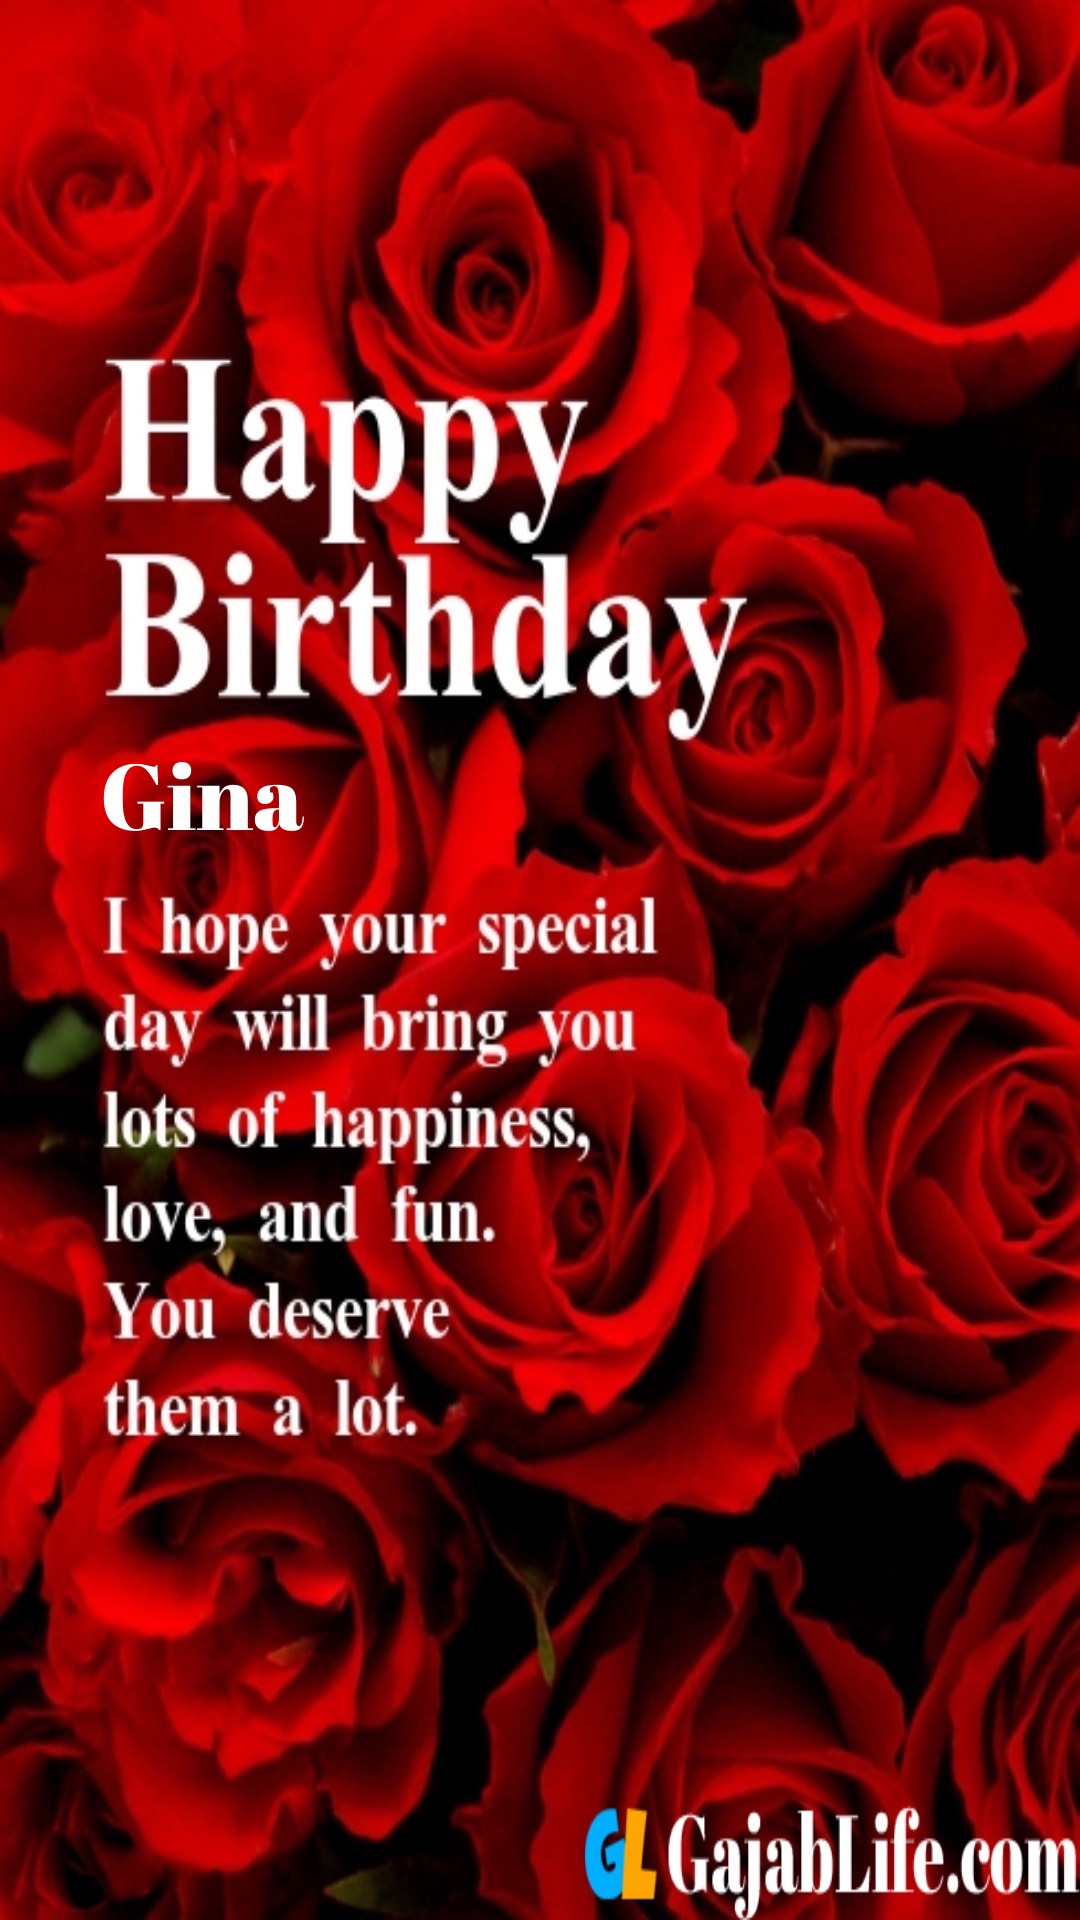 Birthday gina happy Birthday Songs